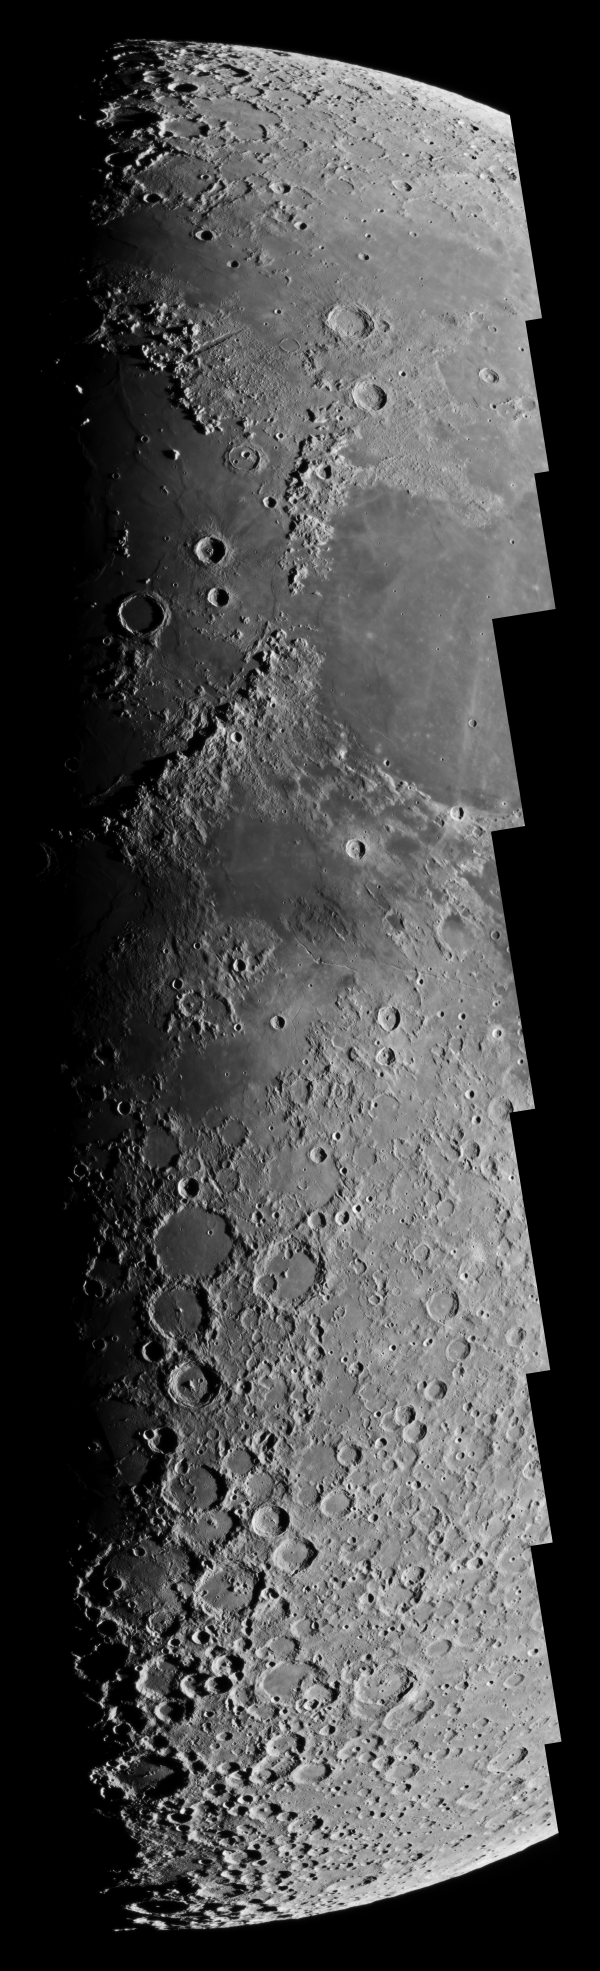 2018.02.23 Moon Terminator mosaic - астрофотография